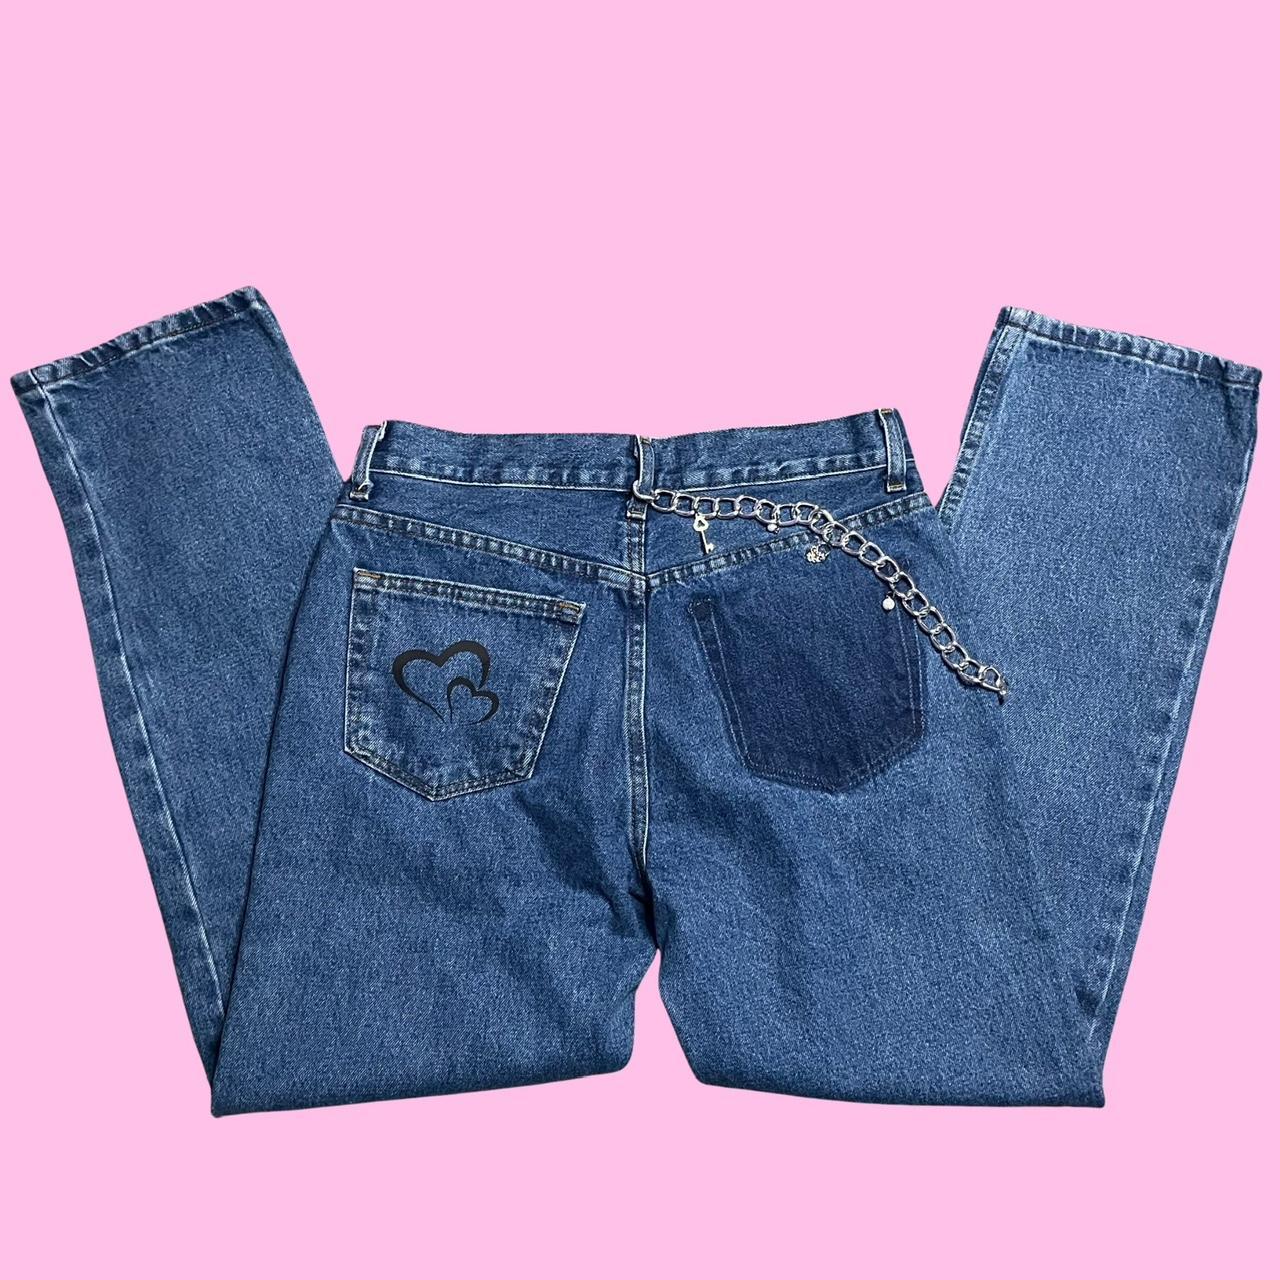 George Men's 5 Pocket Jean Shorts